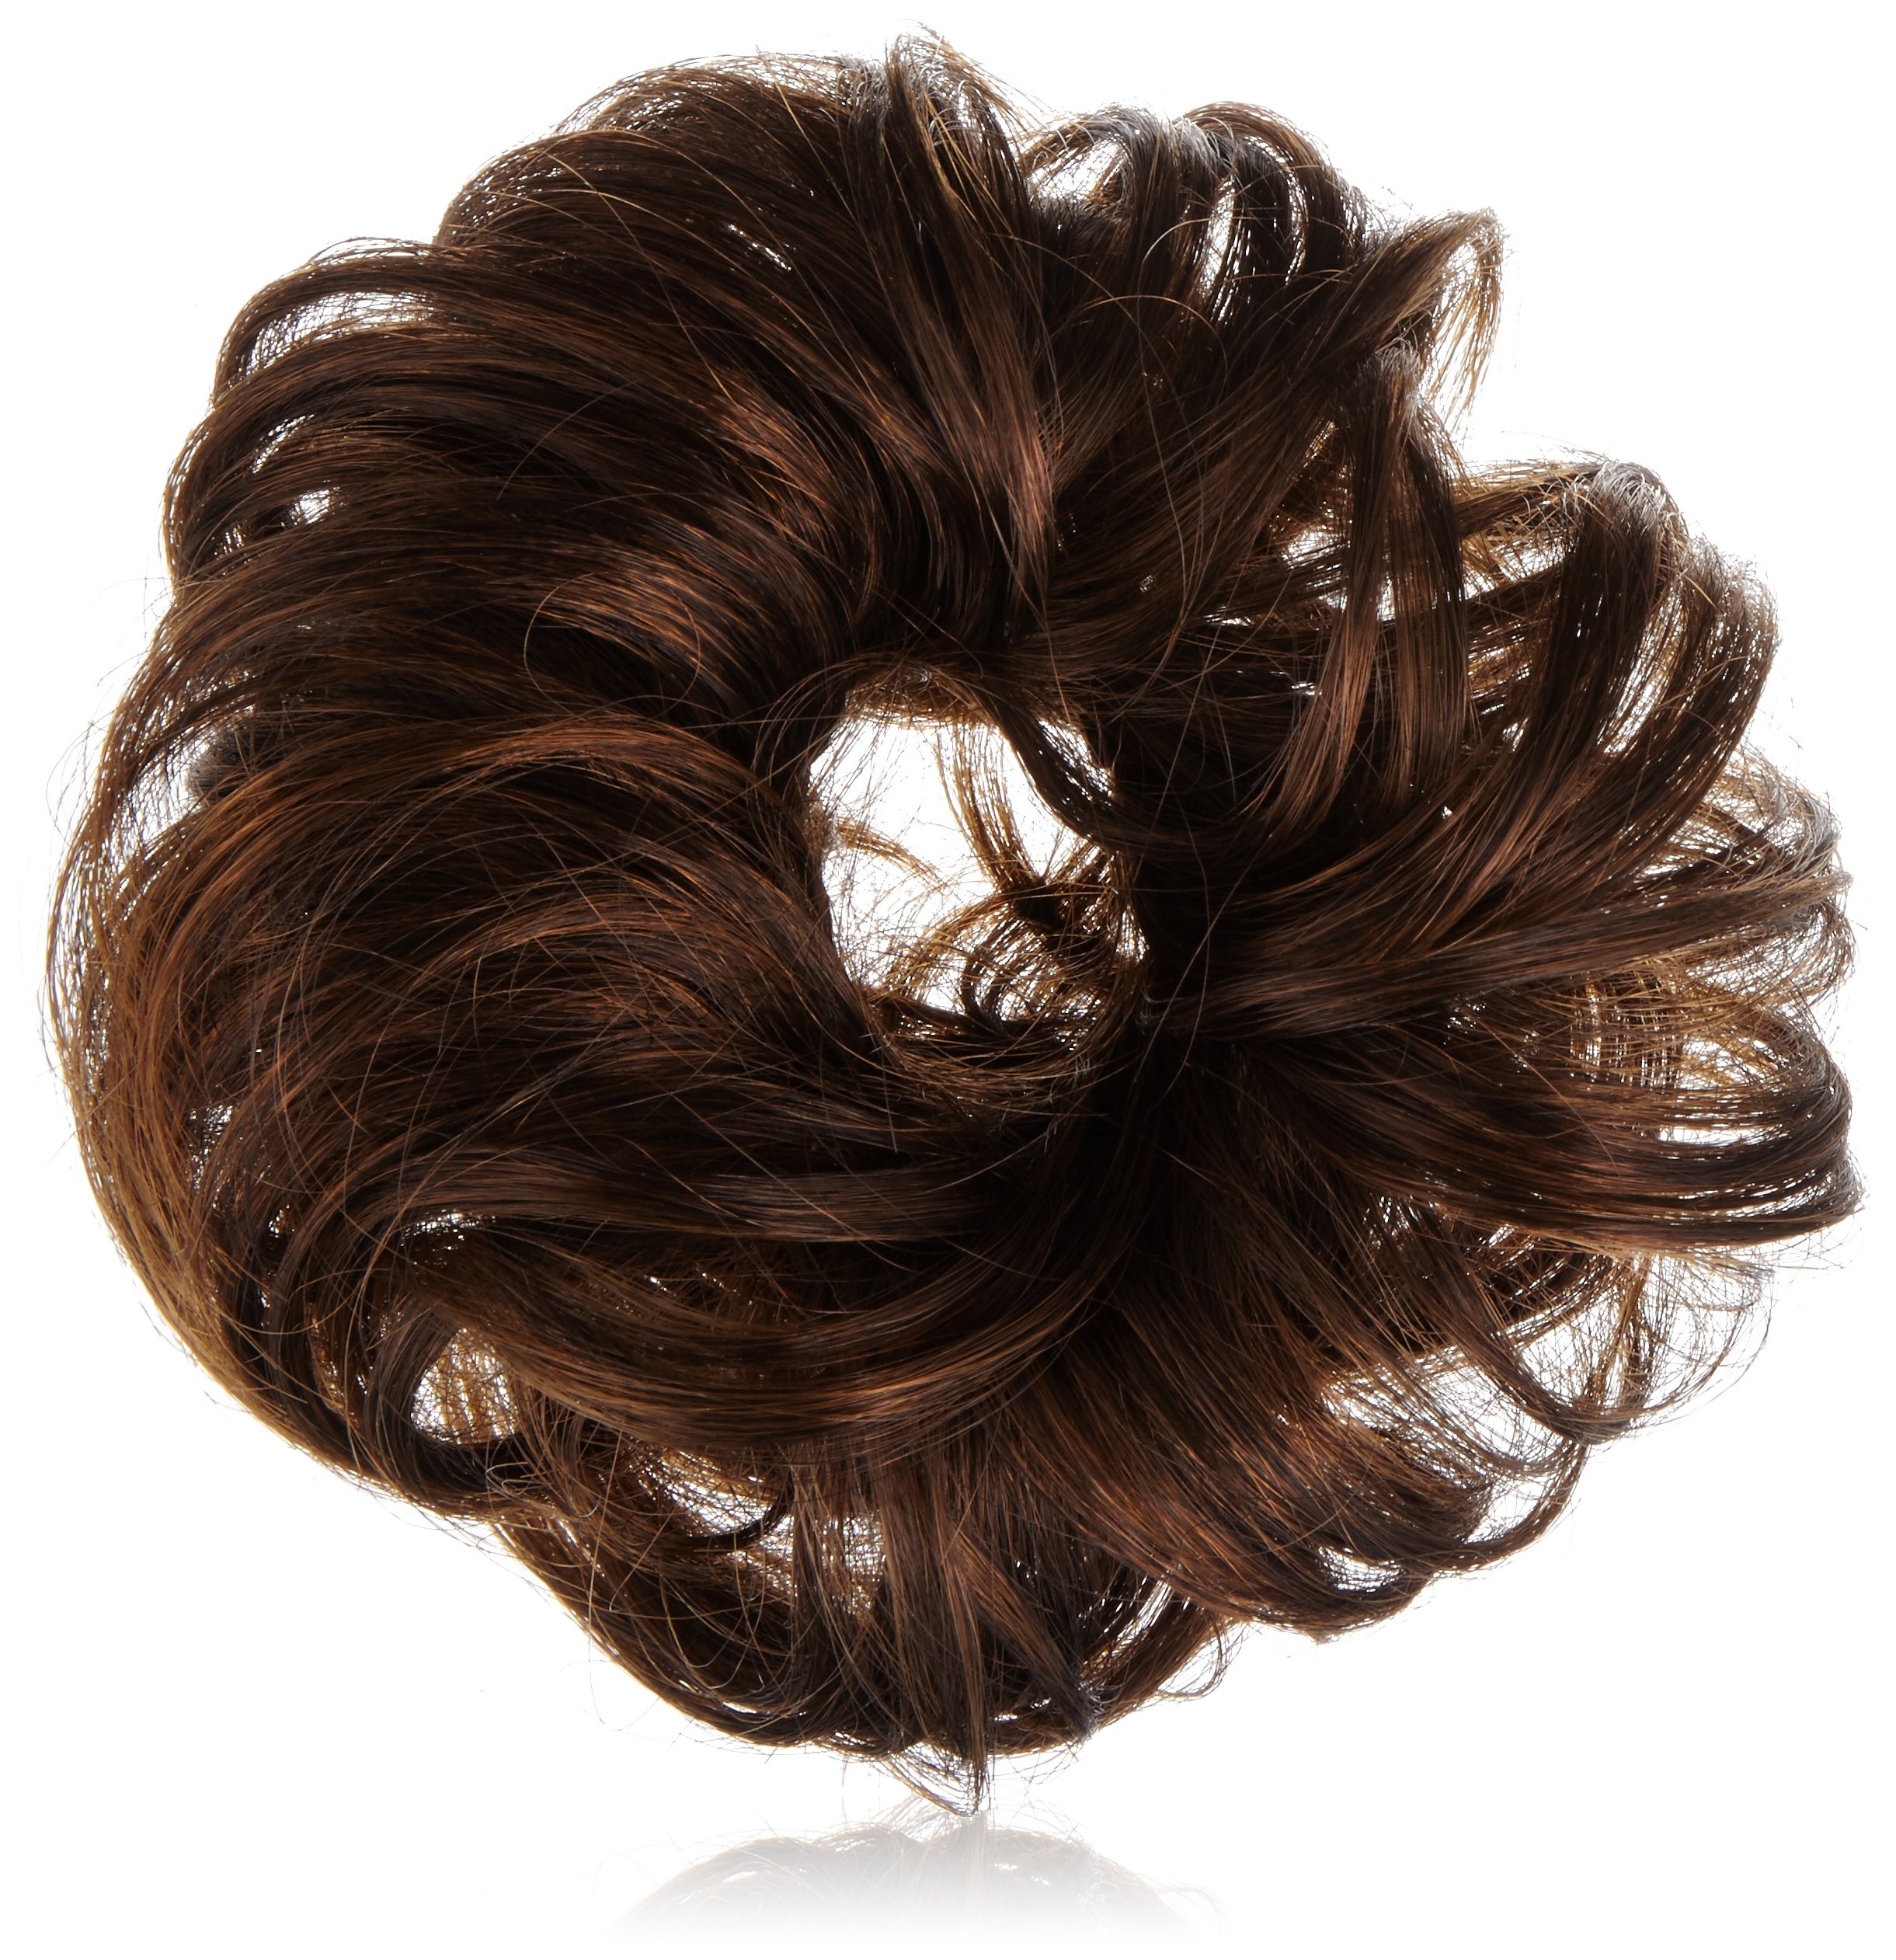 Solida Bel Hair Fashionring Kerstin Kunsthaar, dunkelbraun/ hellbraun, 1 Stück